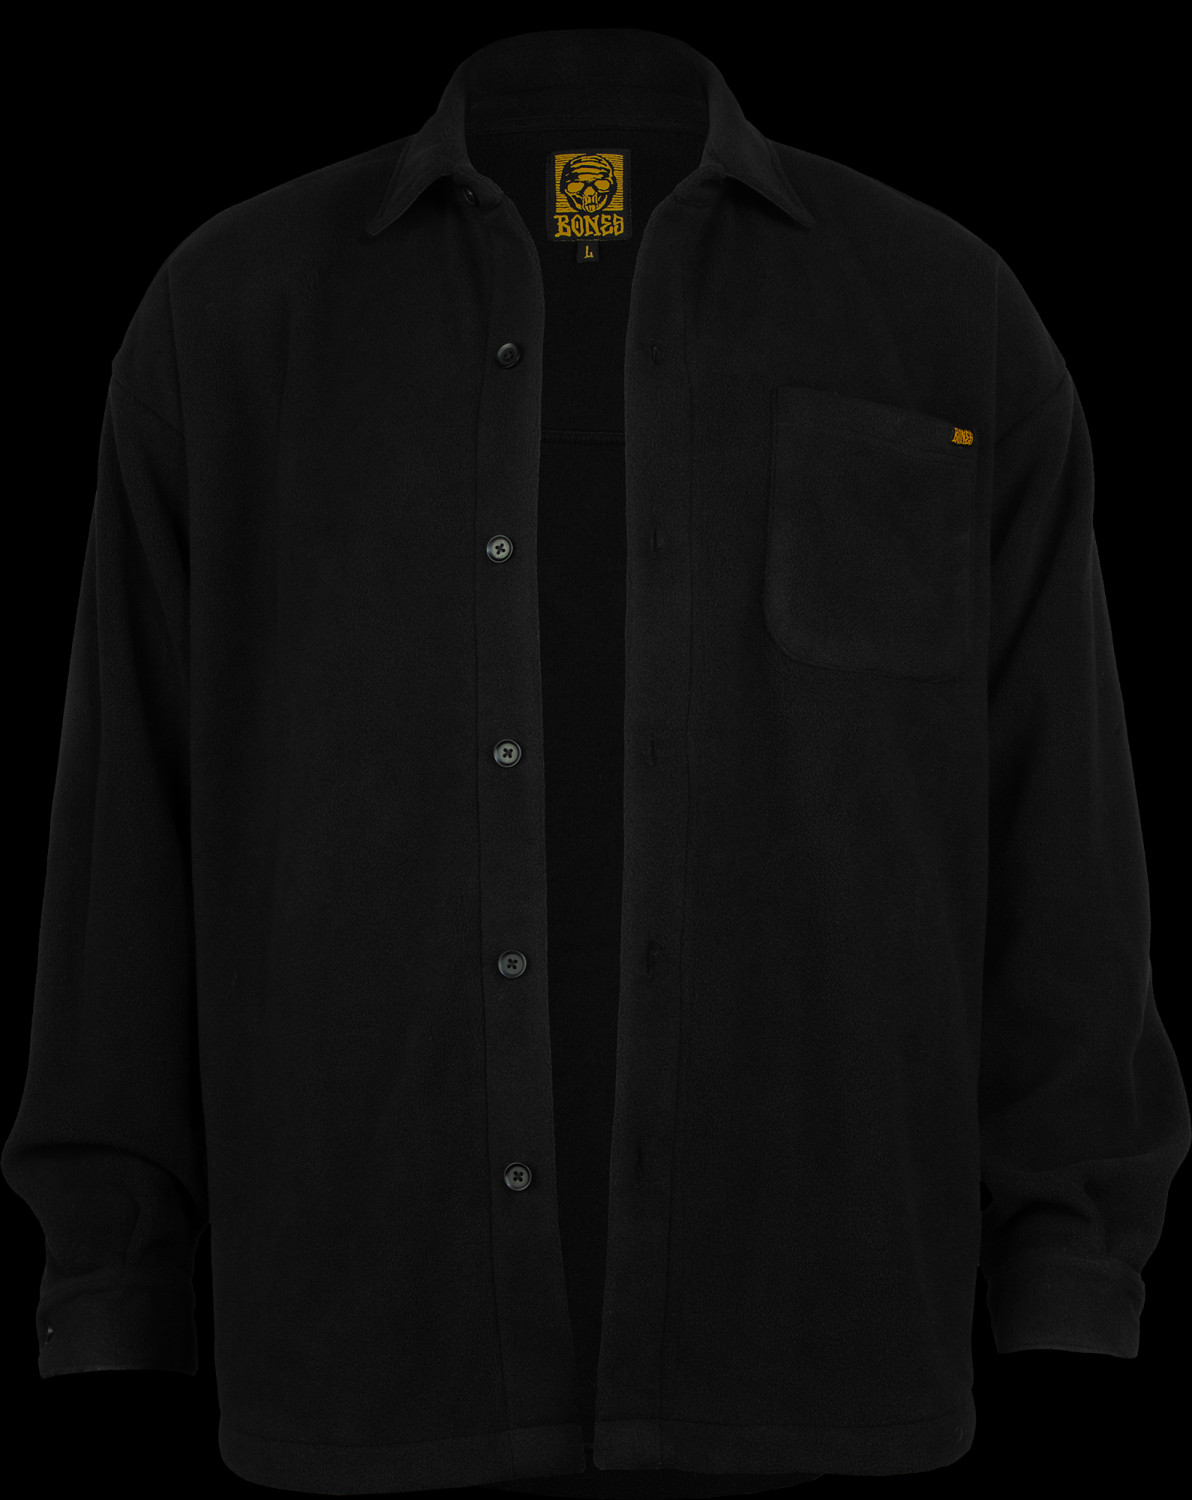 BONES WHEELS Black & Gold Button Up Fleece Jacket - Black Photo #3 ...